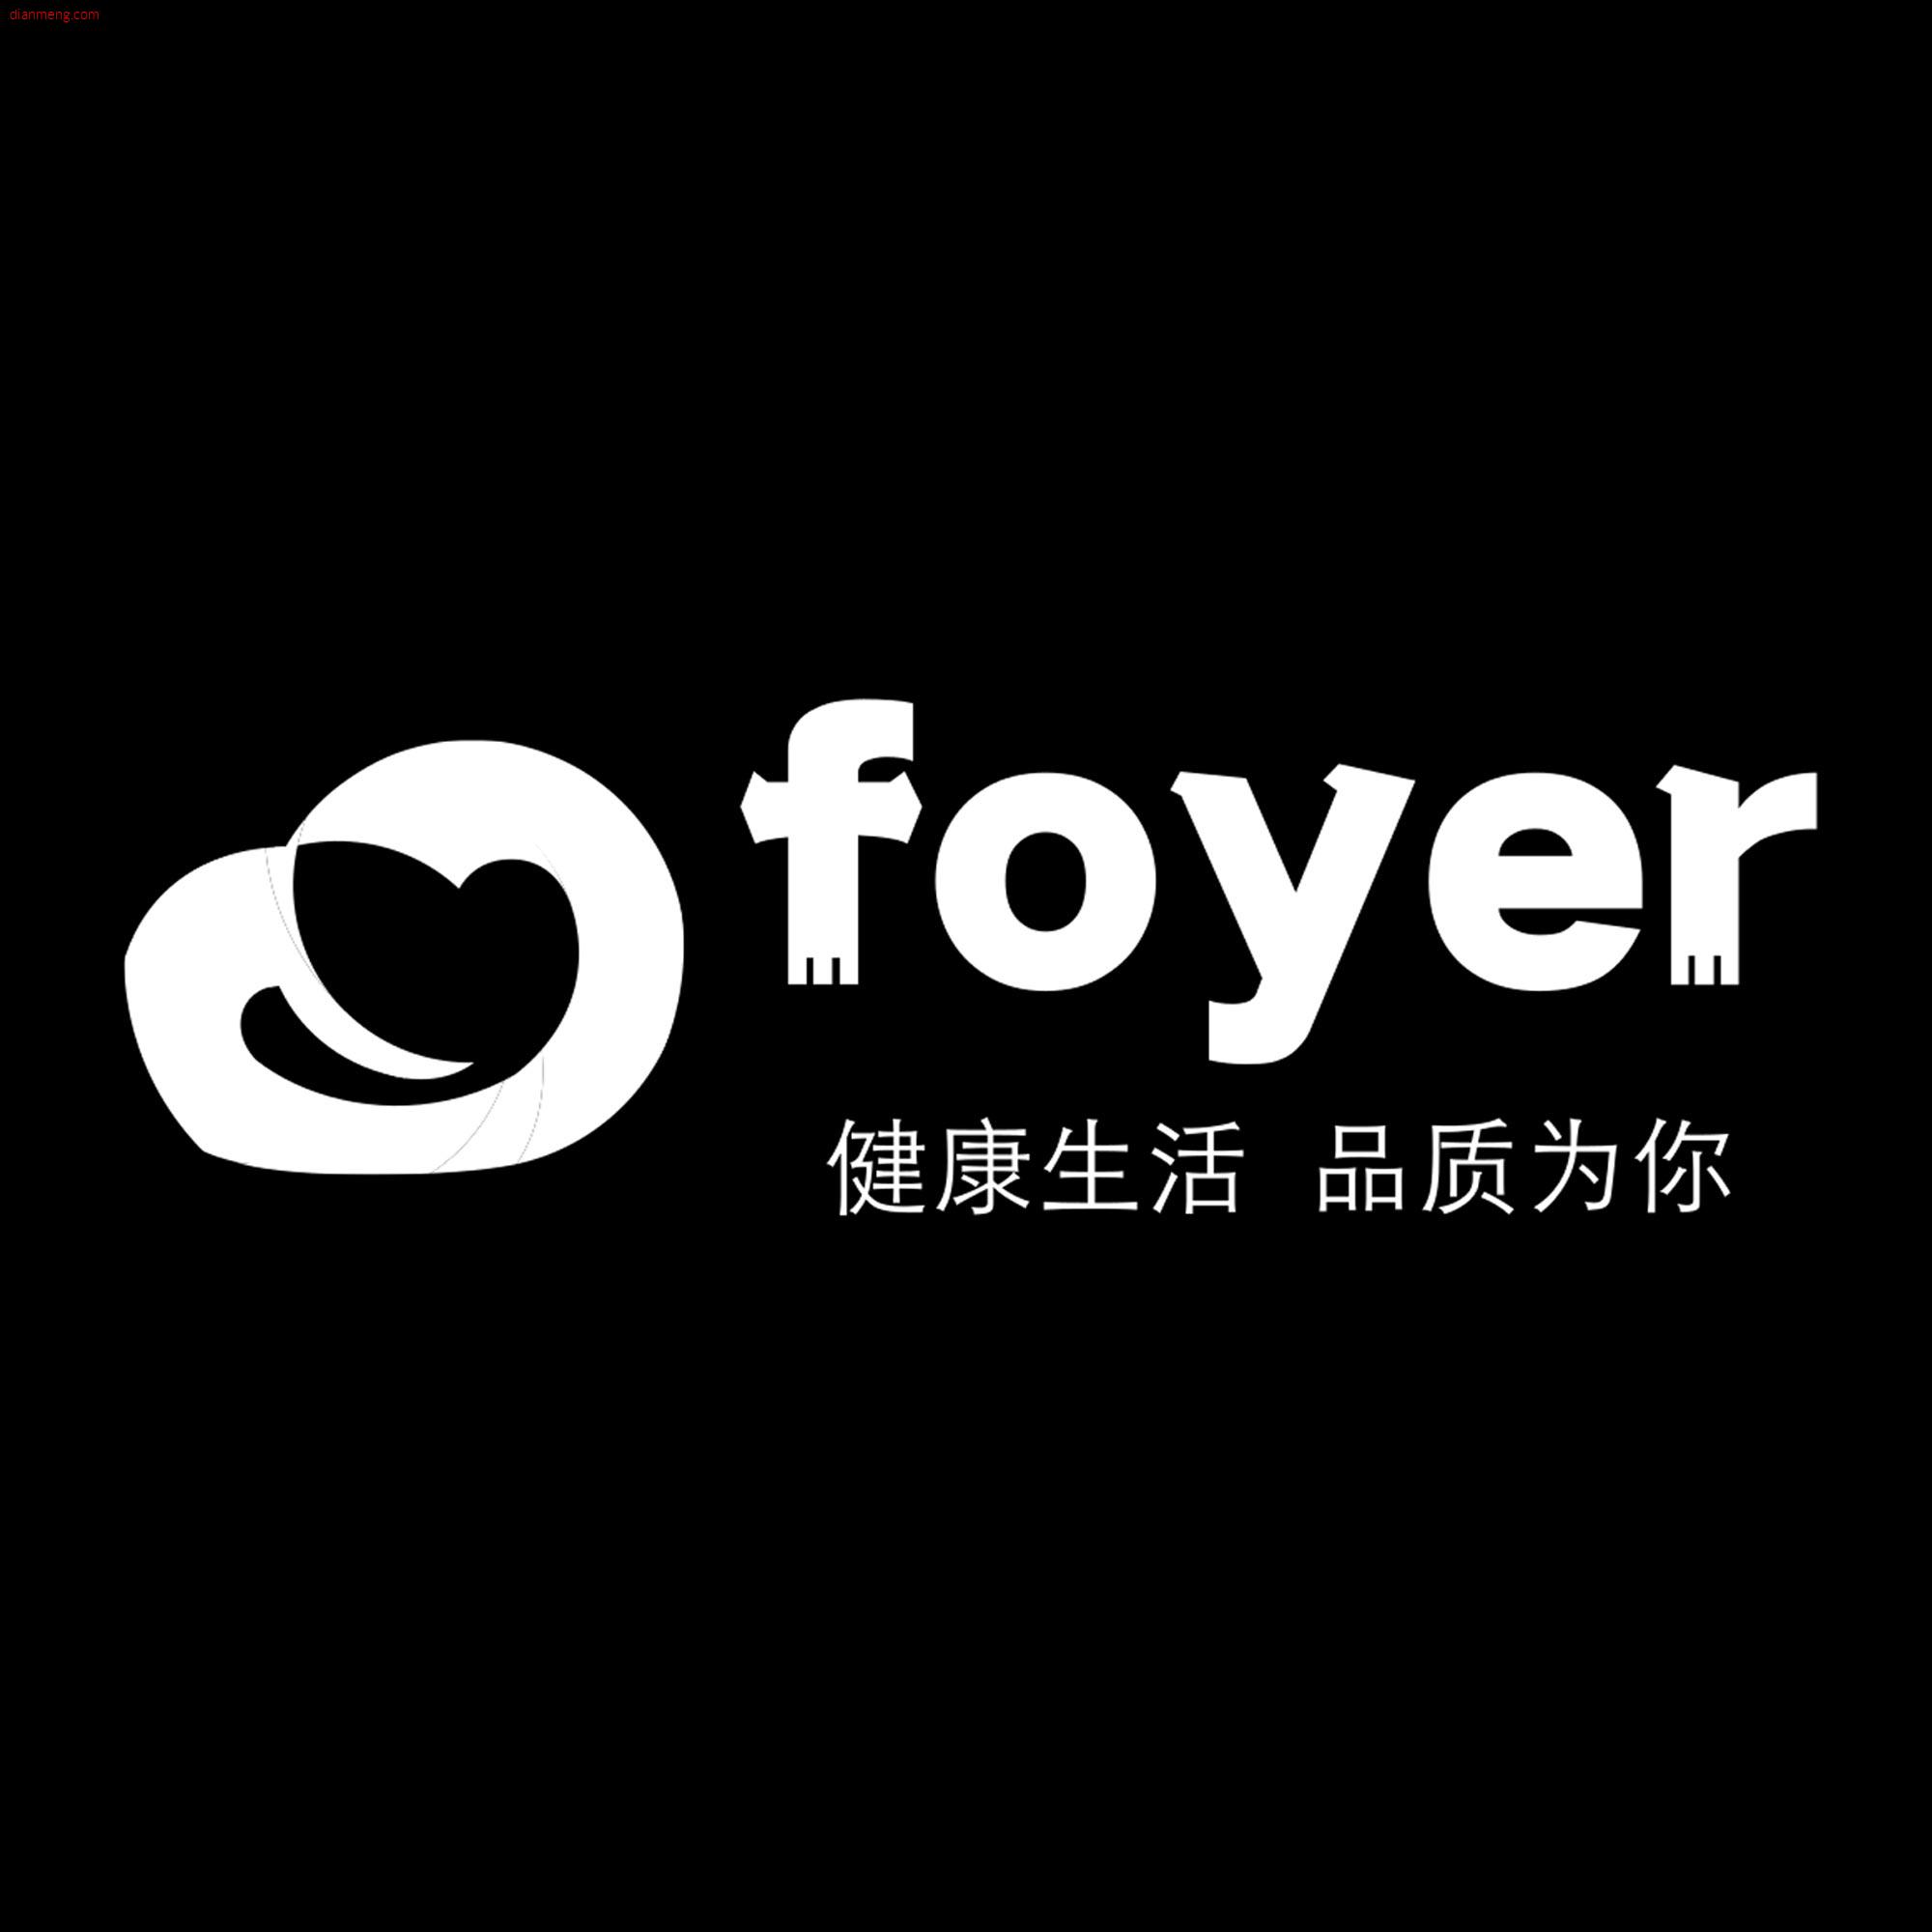 Foyer丨喜棉品牌直销店LOGO